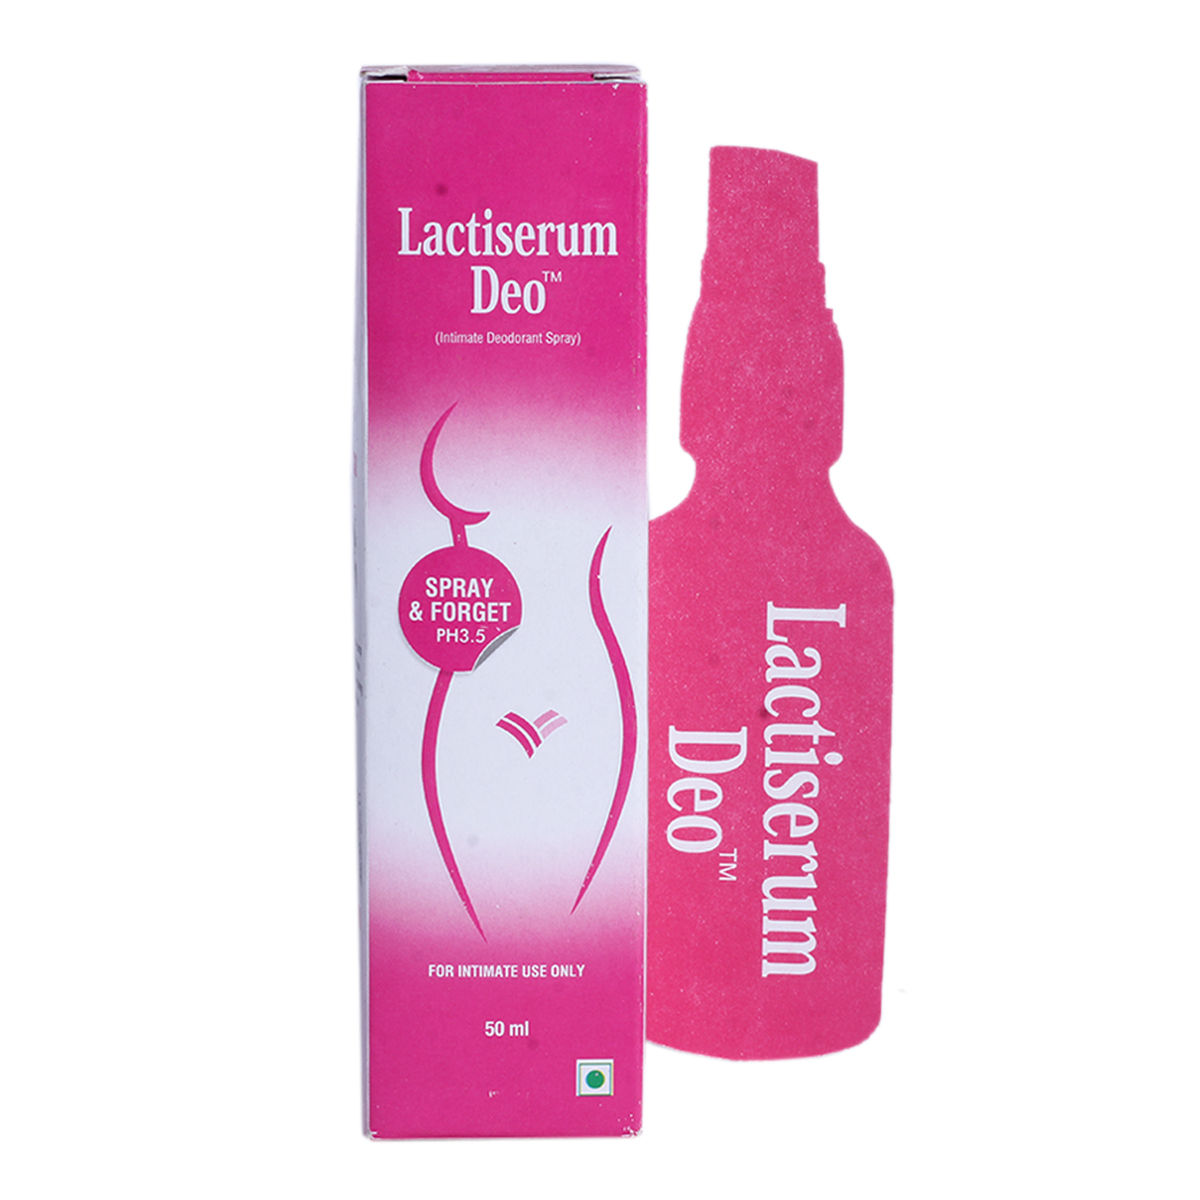 Lactiserum Intimate Deo Spray, 50 ml, Pack of 1 Spray